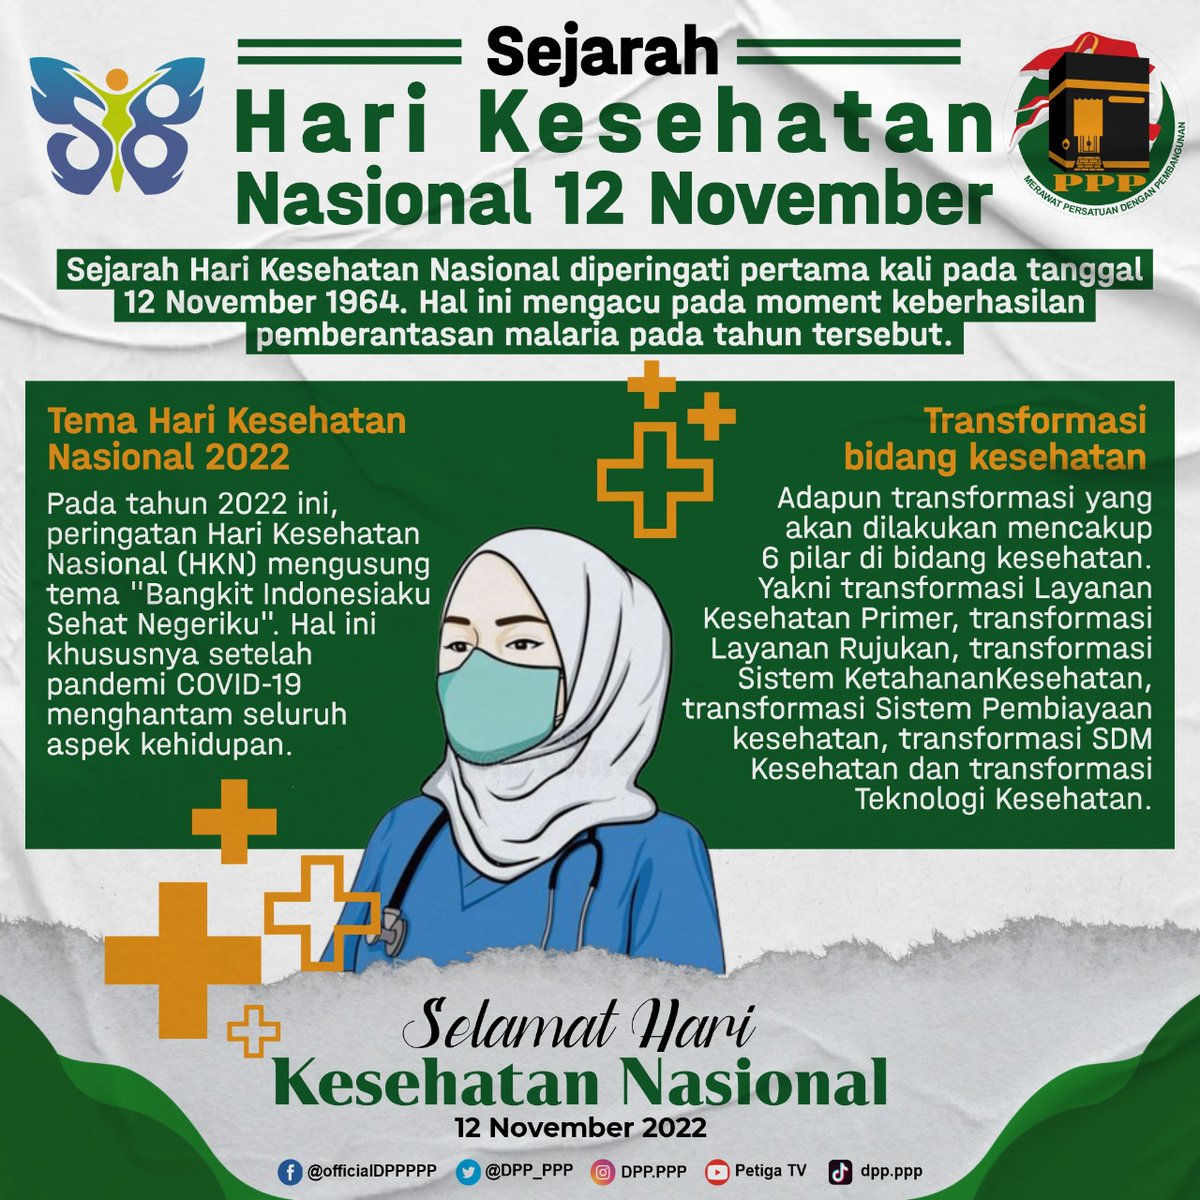 Selamat Hari Kesehatan Nasional 2022

'Bangkit Indonesiaku Sehat Negeriku'

#harikesehatannasional #PartaiPPP